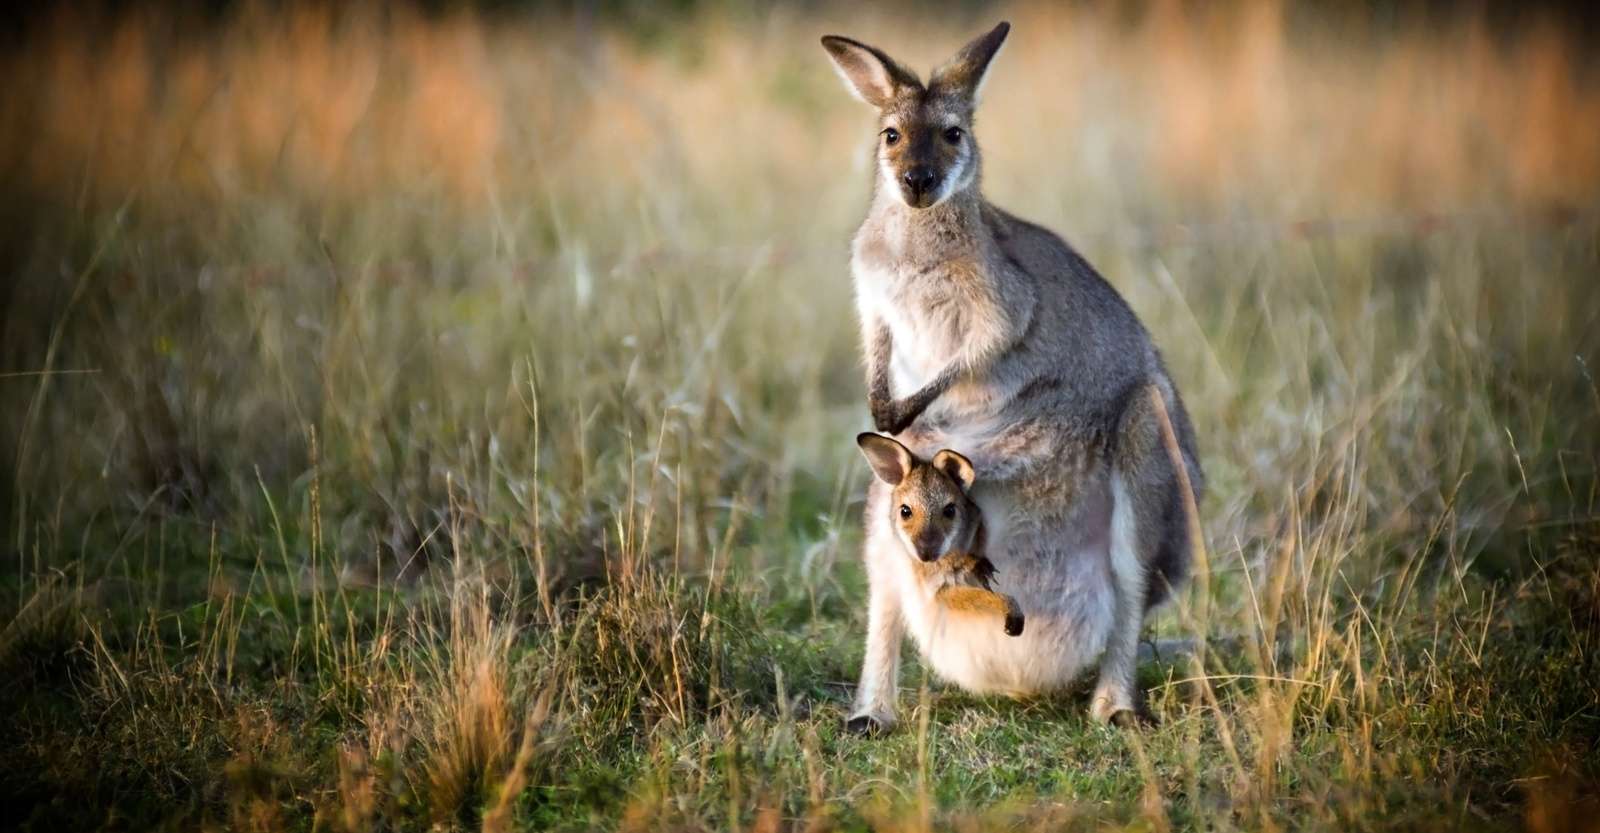 Kangaroo and joey, Australia.